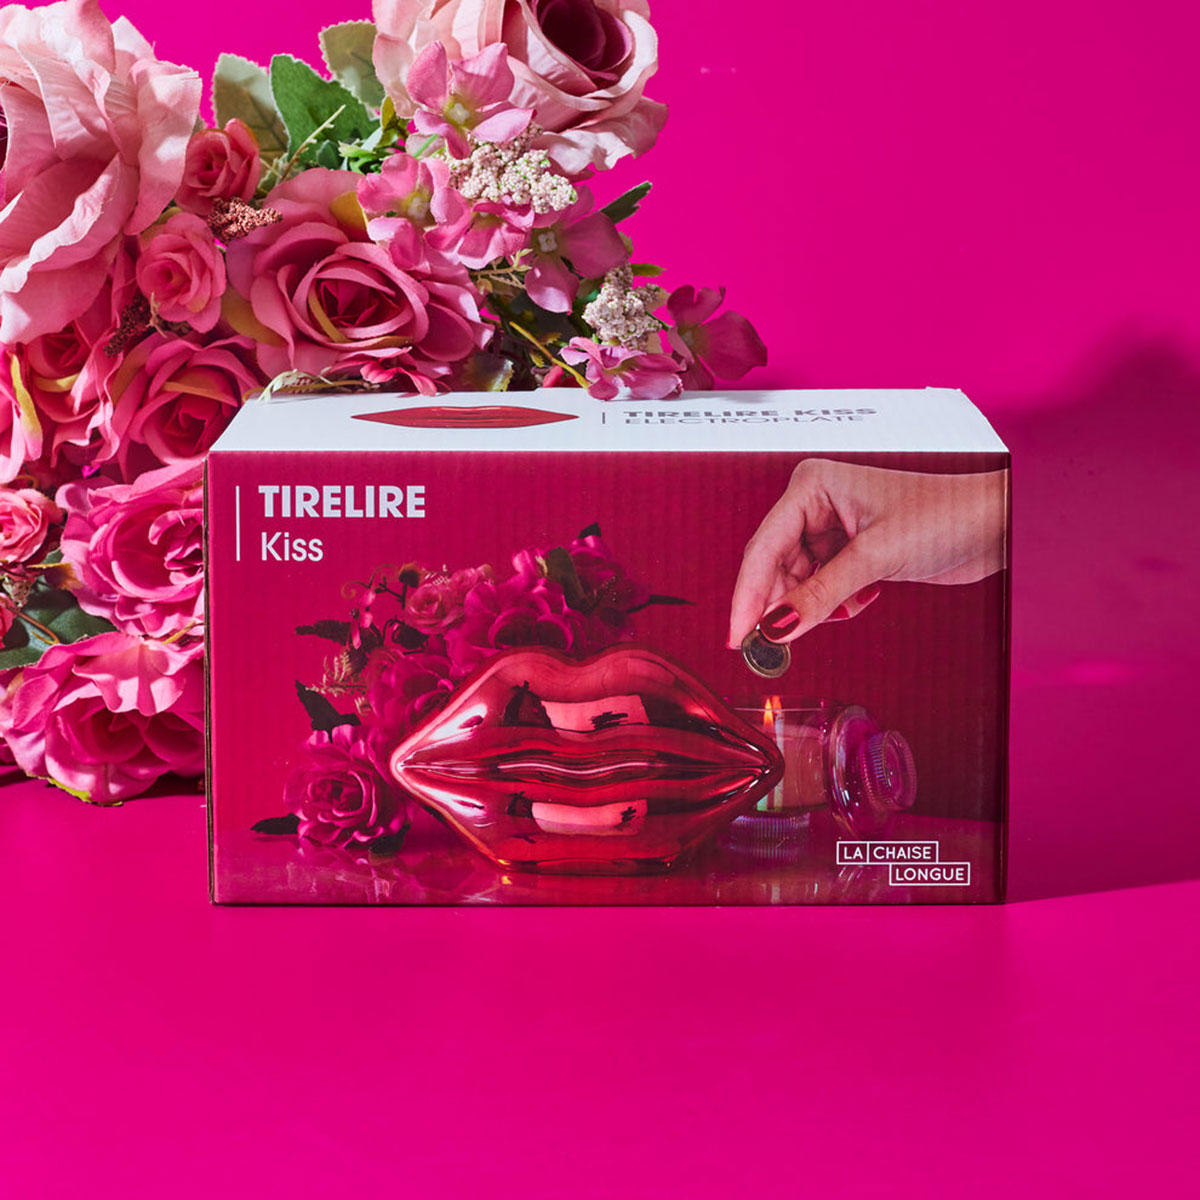 Tirelire Kiss en cramique rose